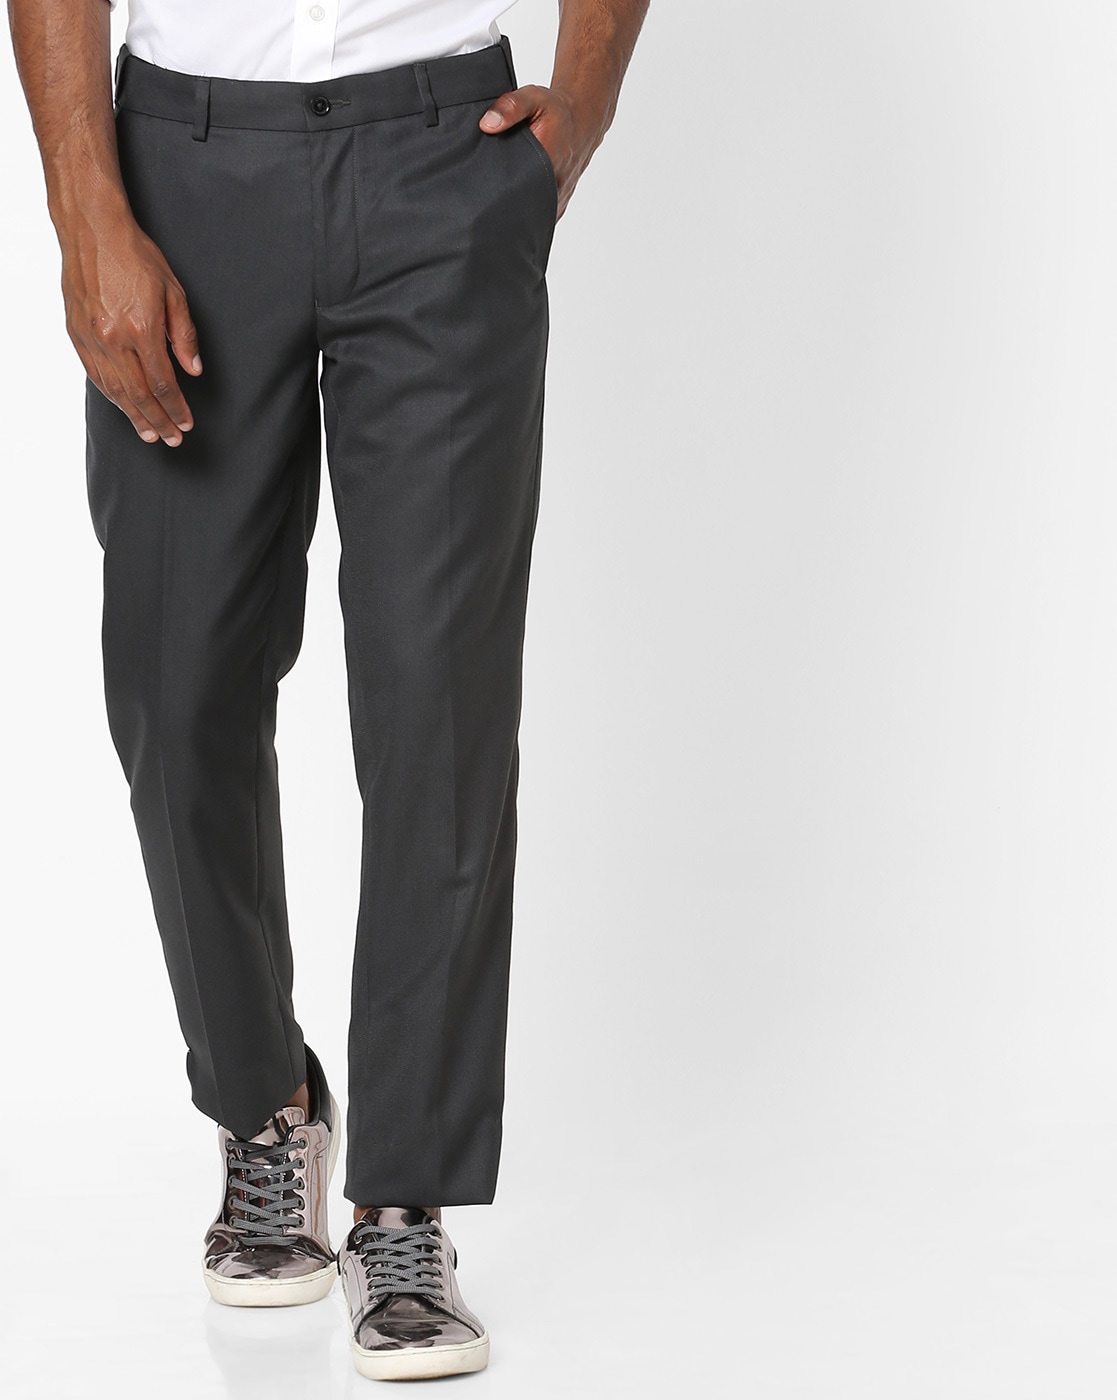 Windowpane Check Birdseye Travel Suit Trousers  Charcoal Grey  Charles  Tyrwhitt